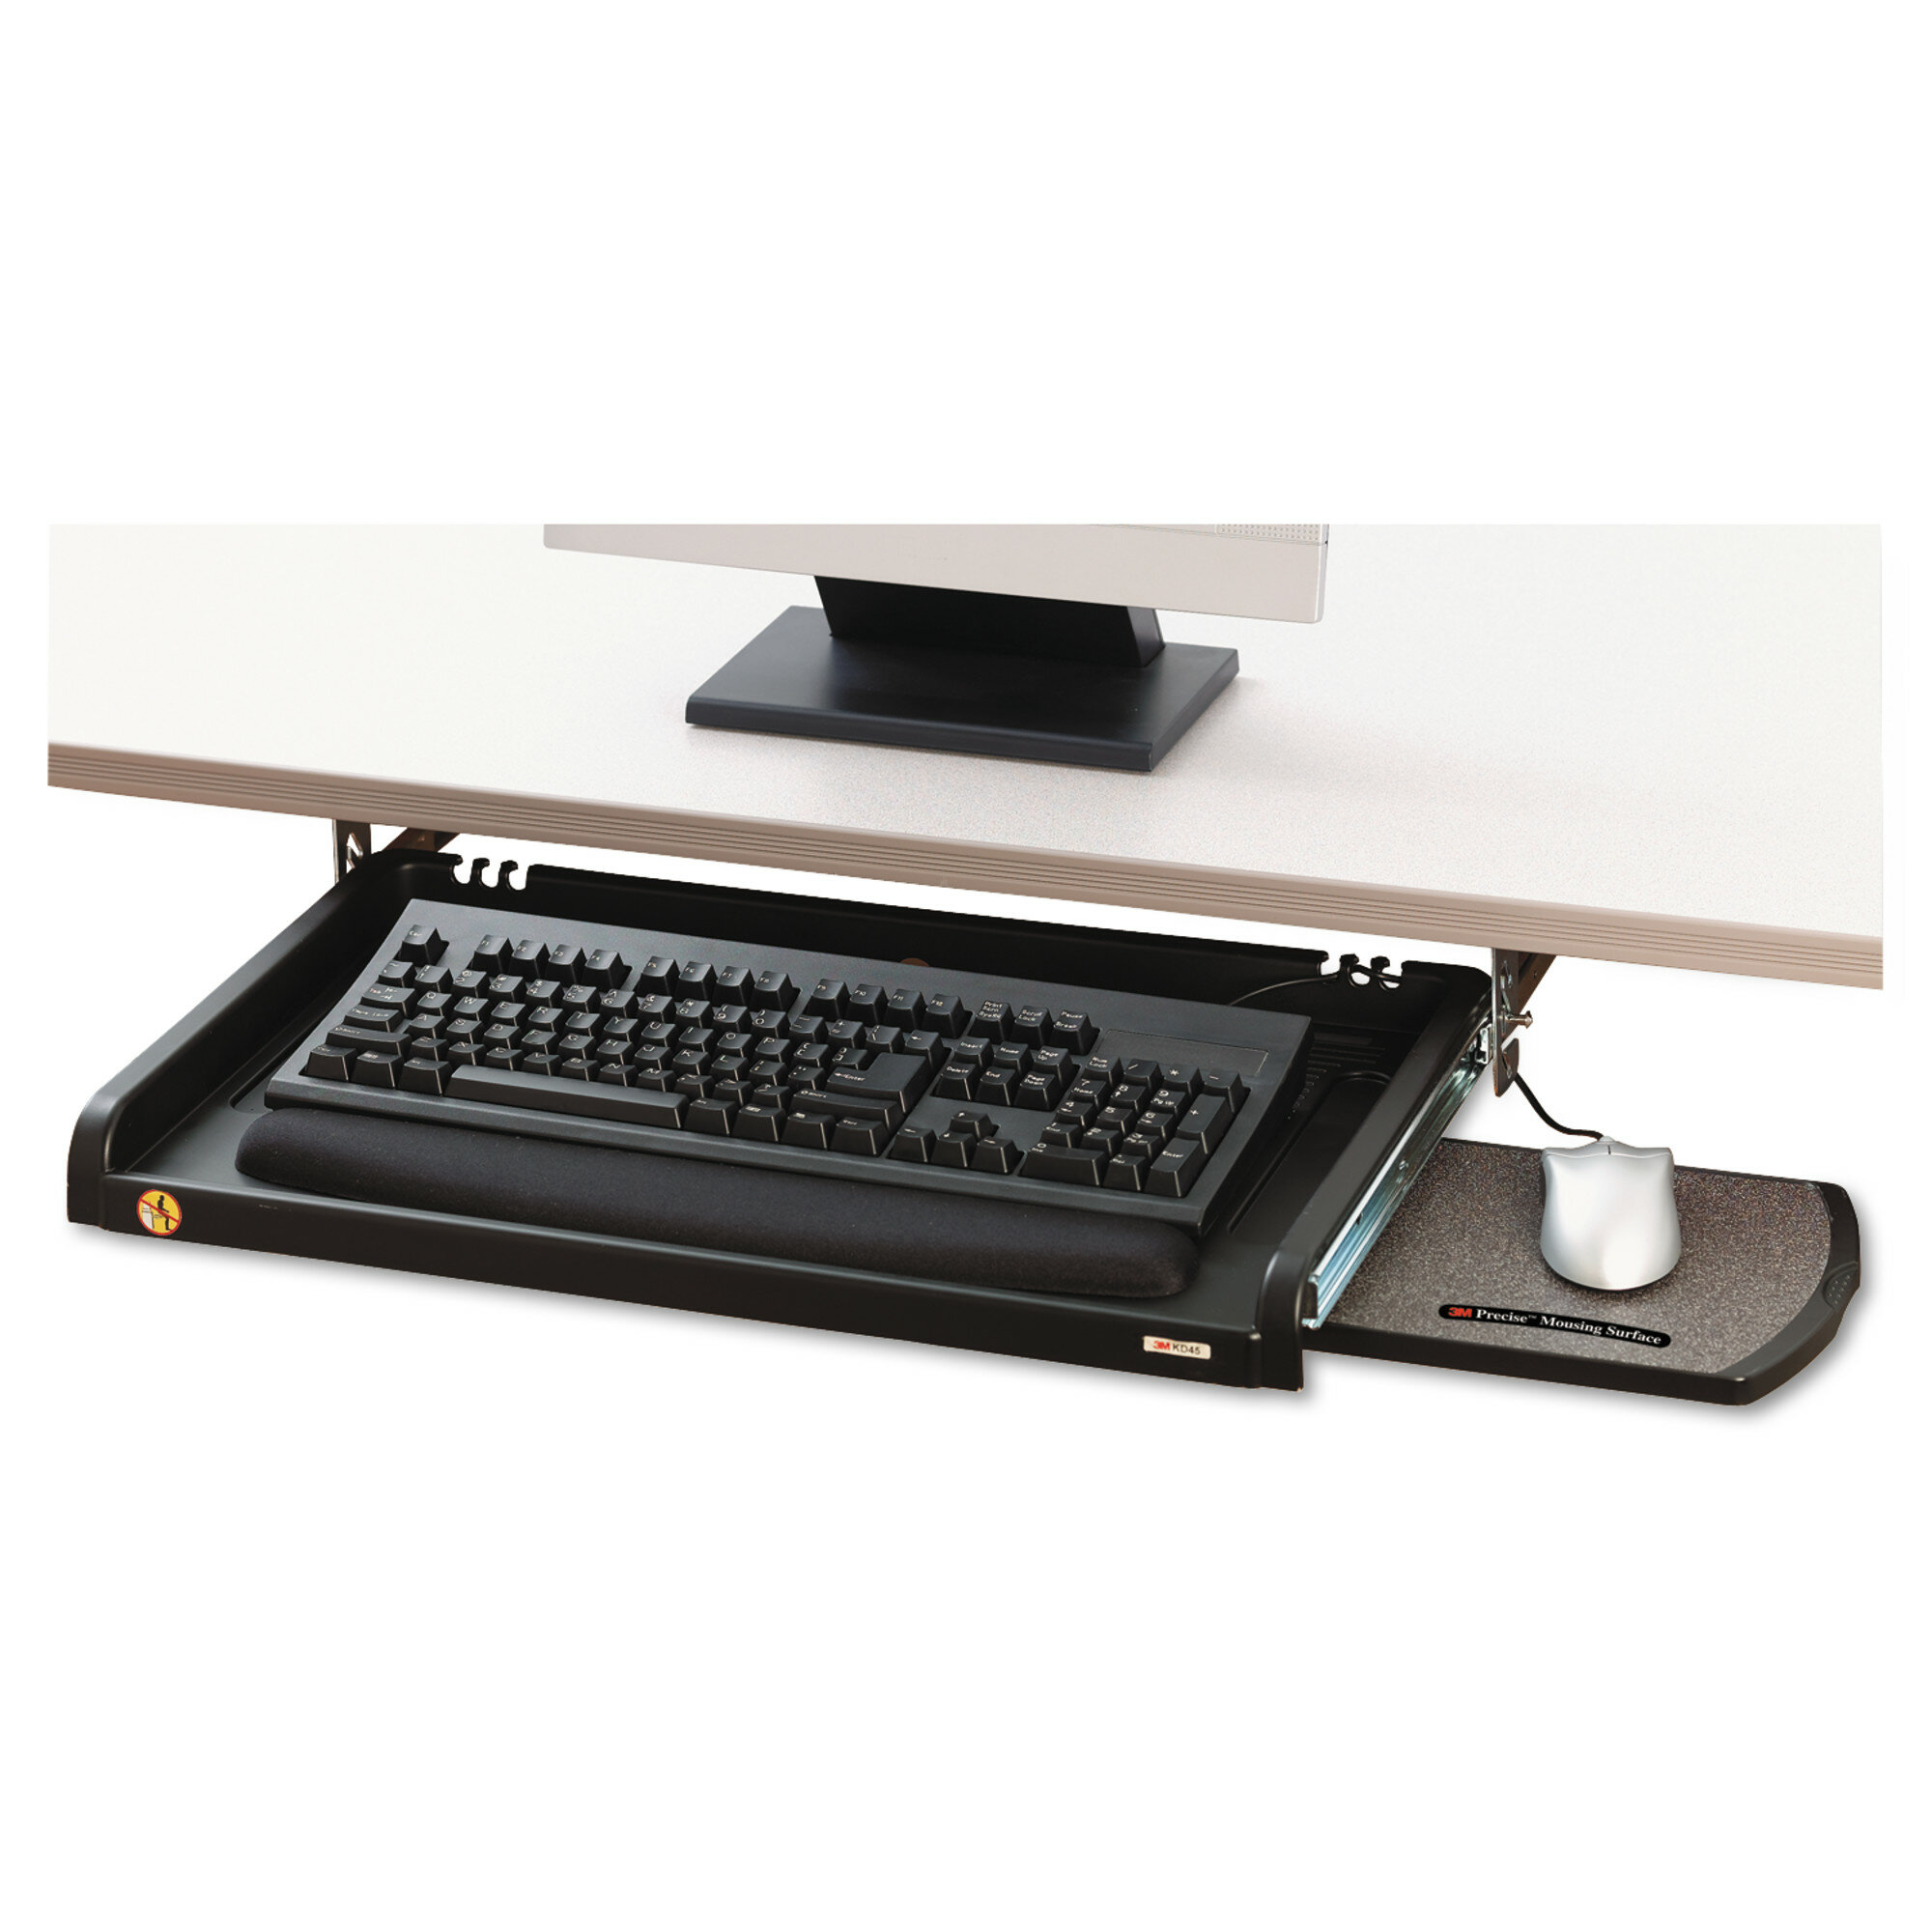 3m 3m Adjustable Underdesk 26 4 H X 23 W Desk Keyboard Tray